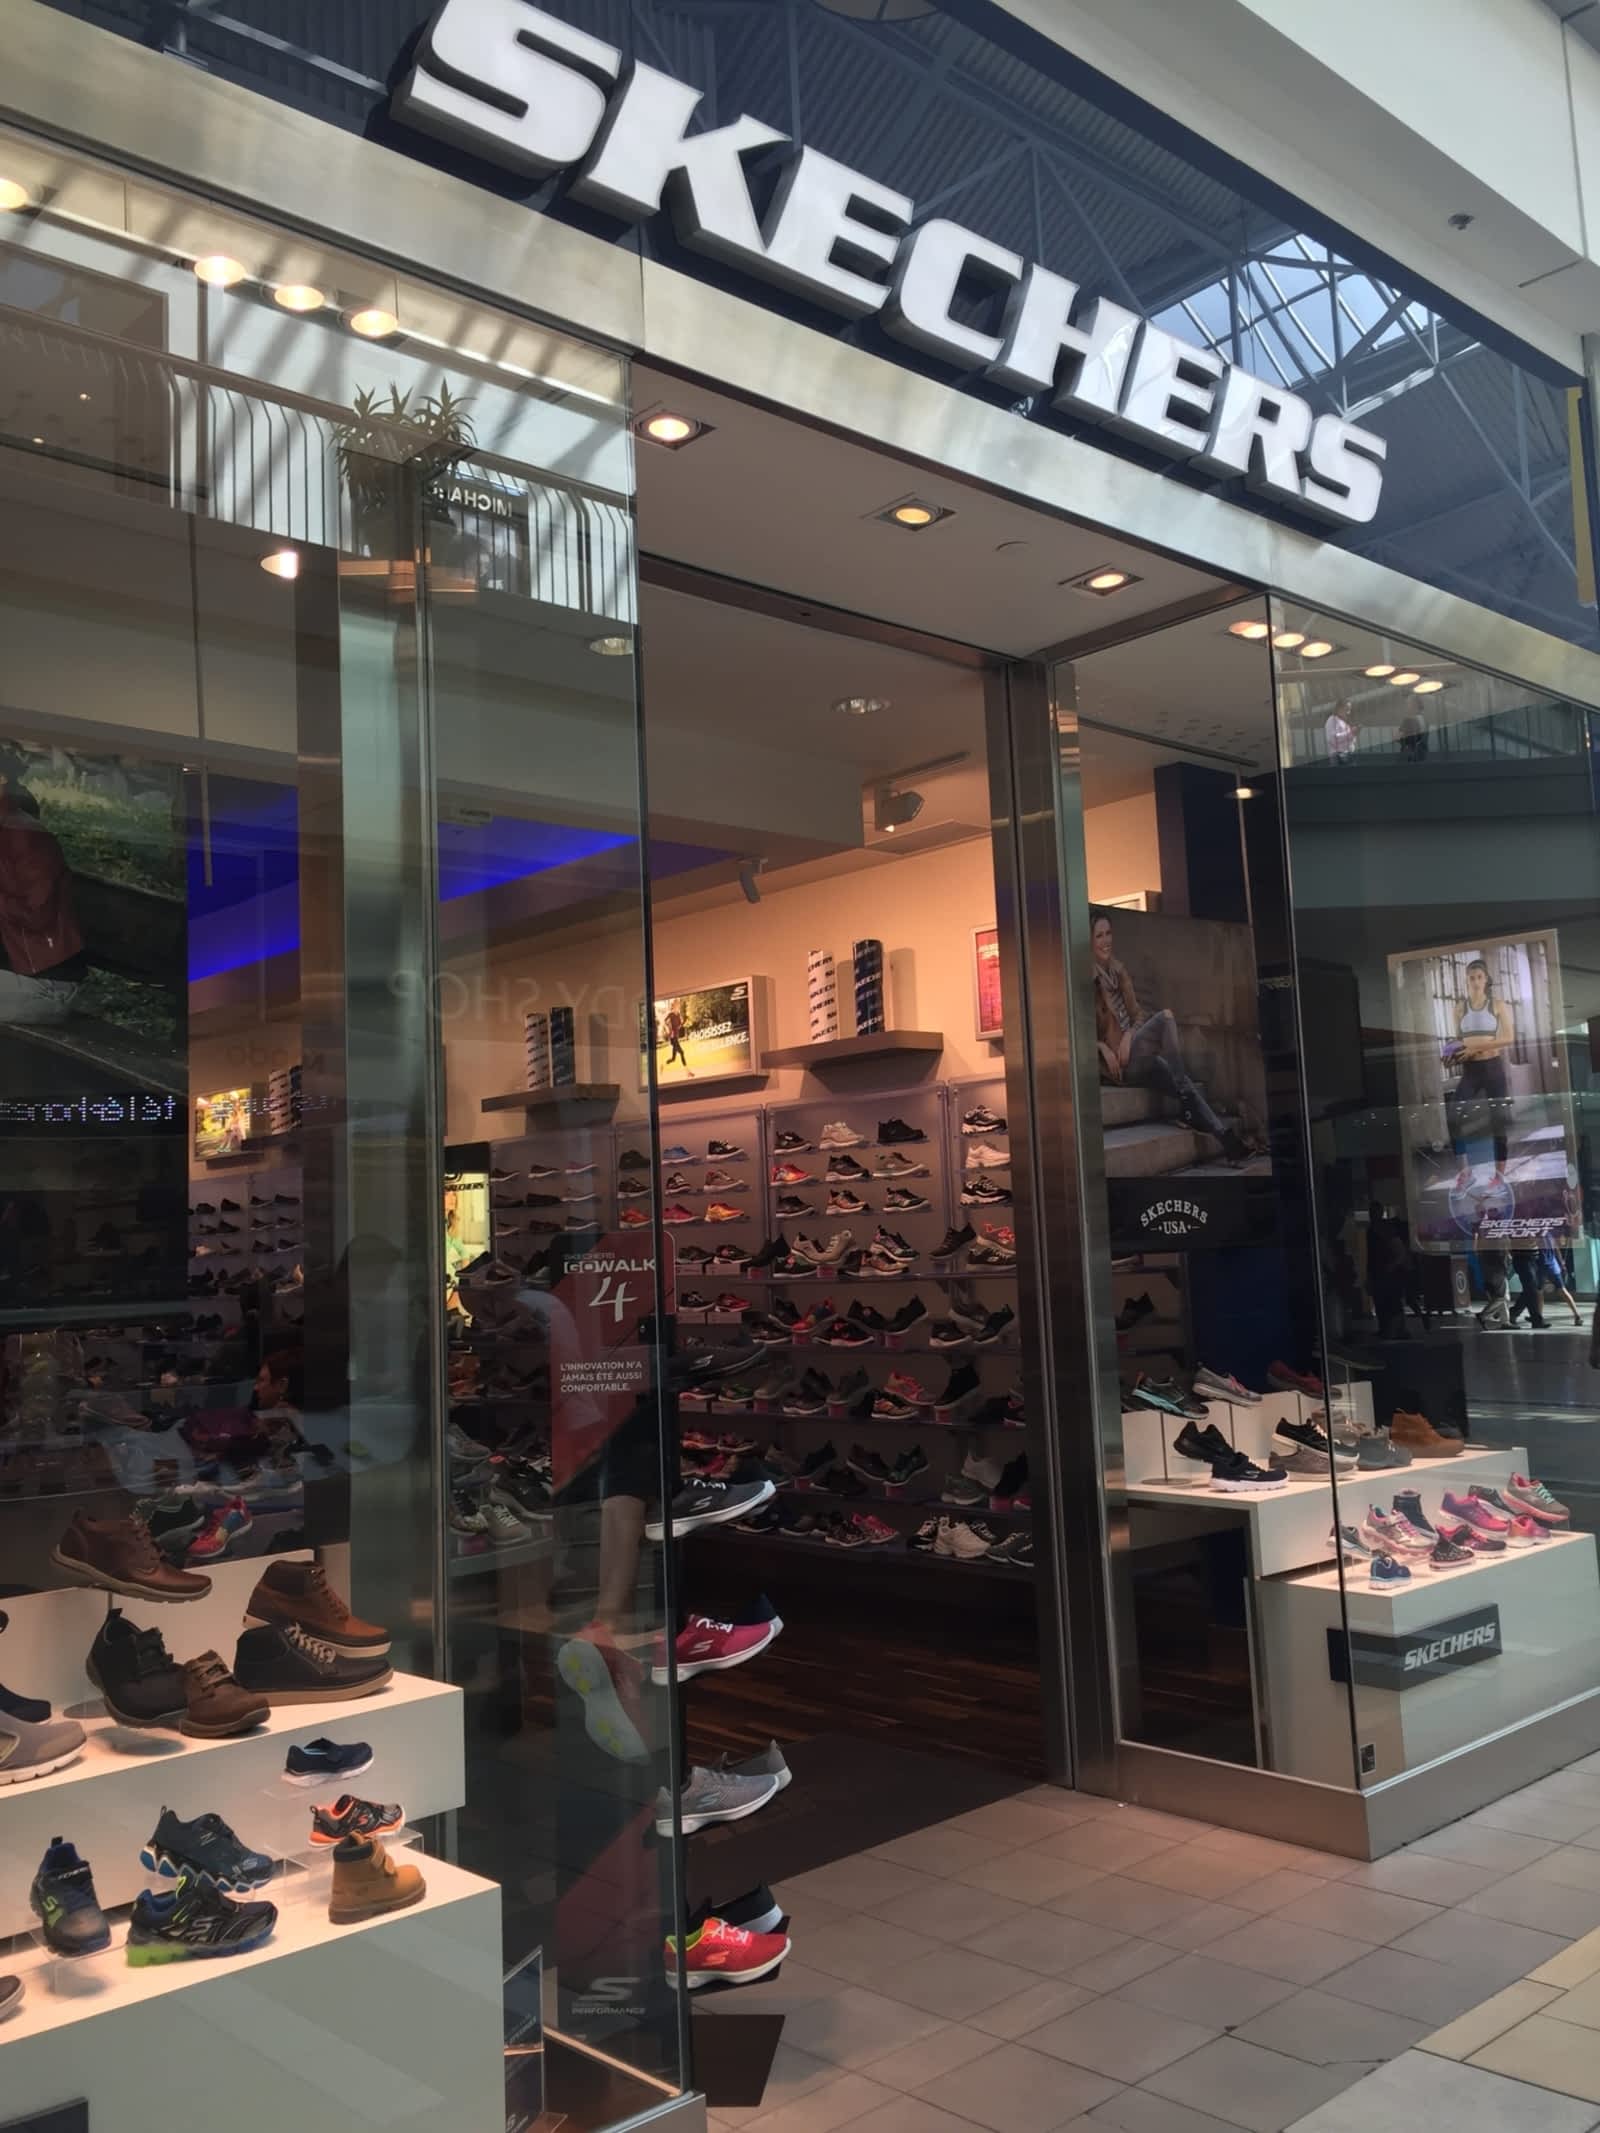 Skechers Calgary Stores 59%.